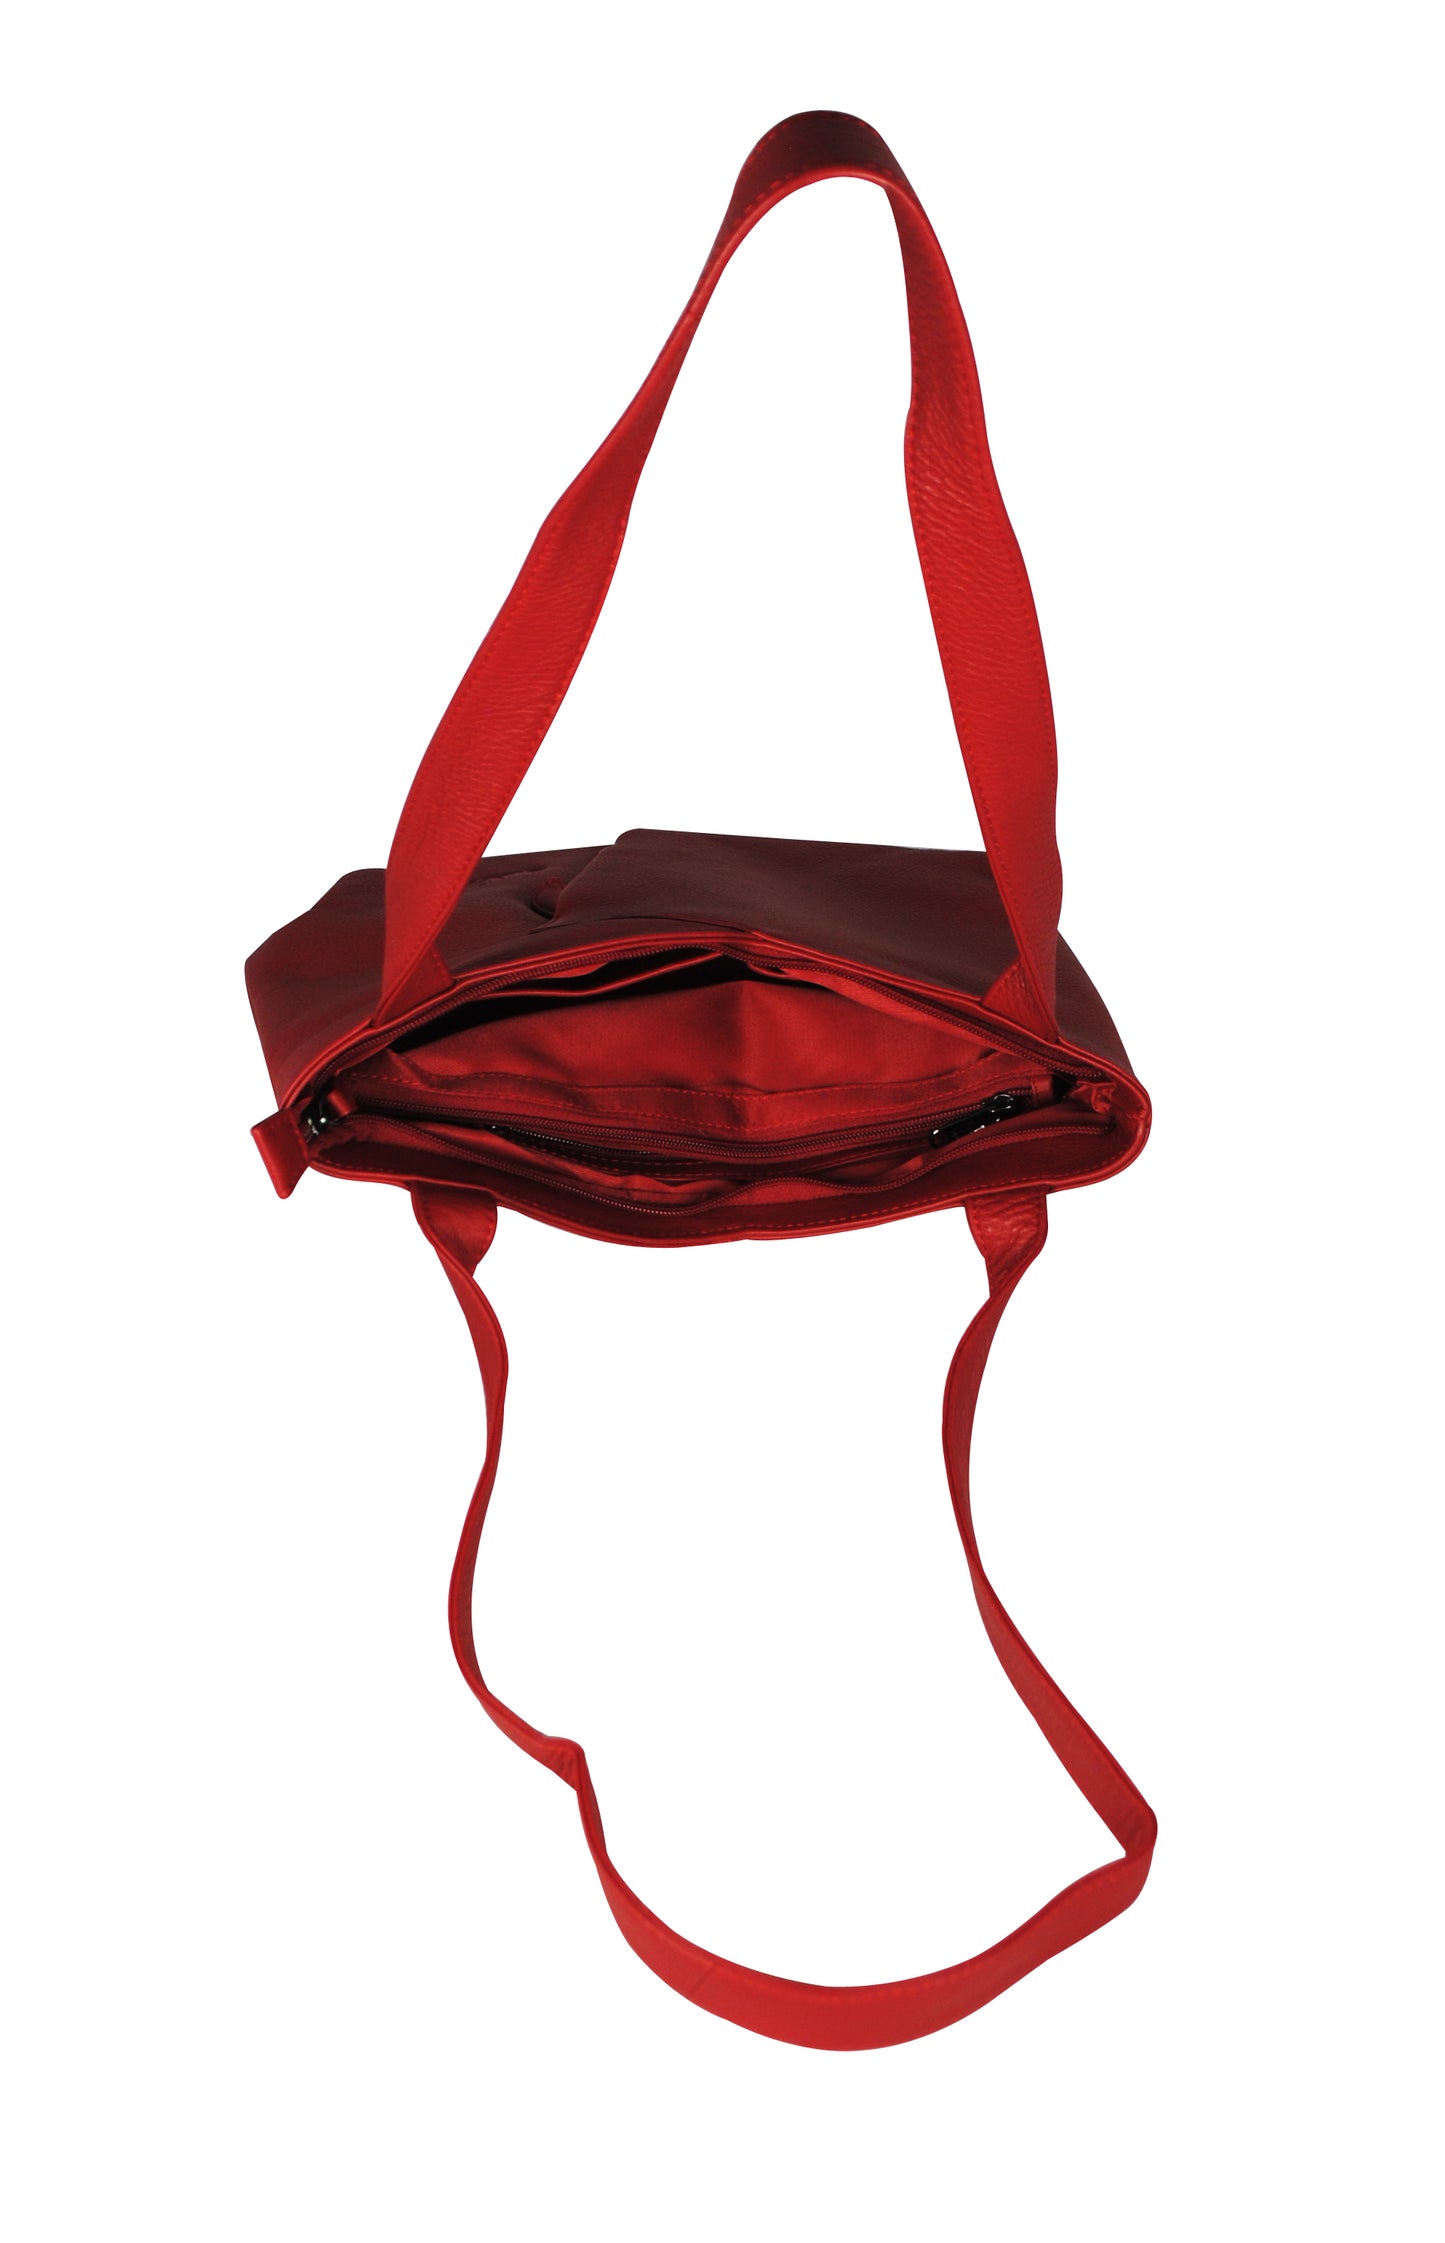 Calfnero Women's Genuine Leather Shoulder Bag (71080-Red)